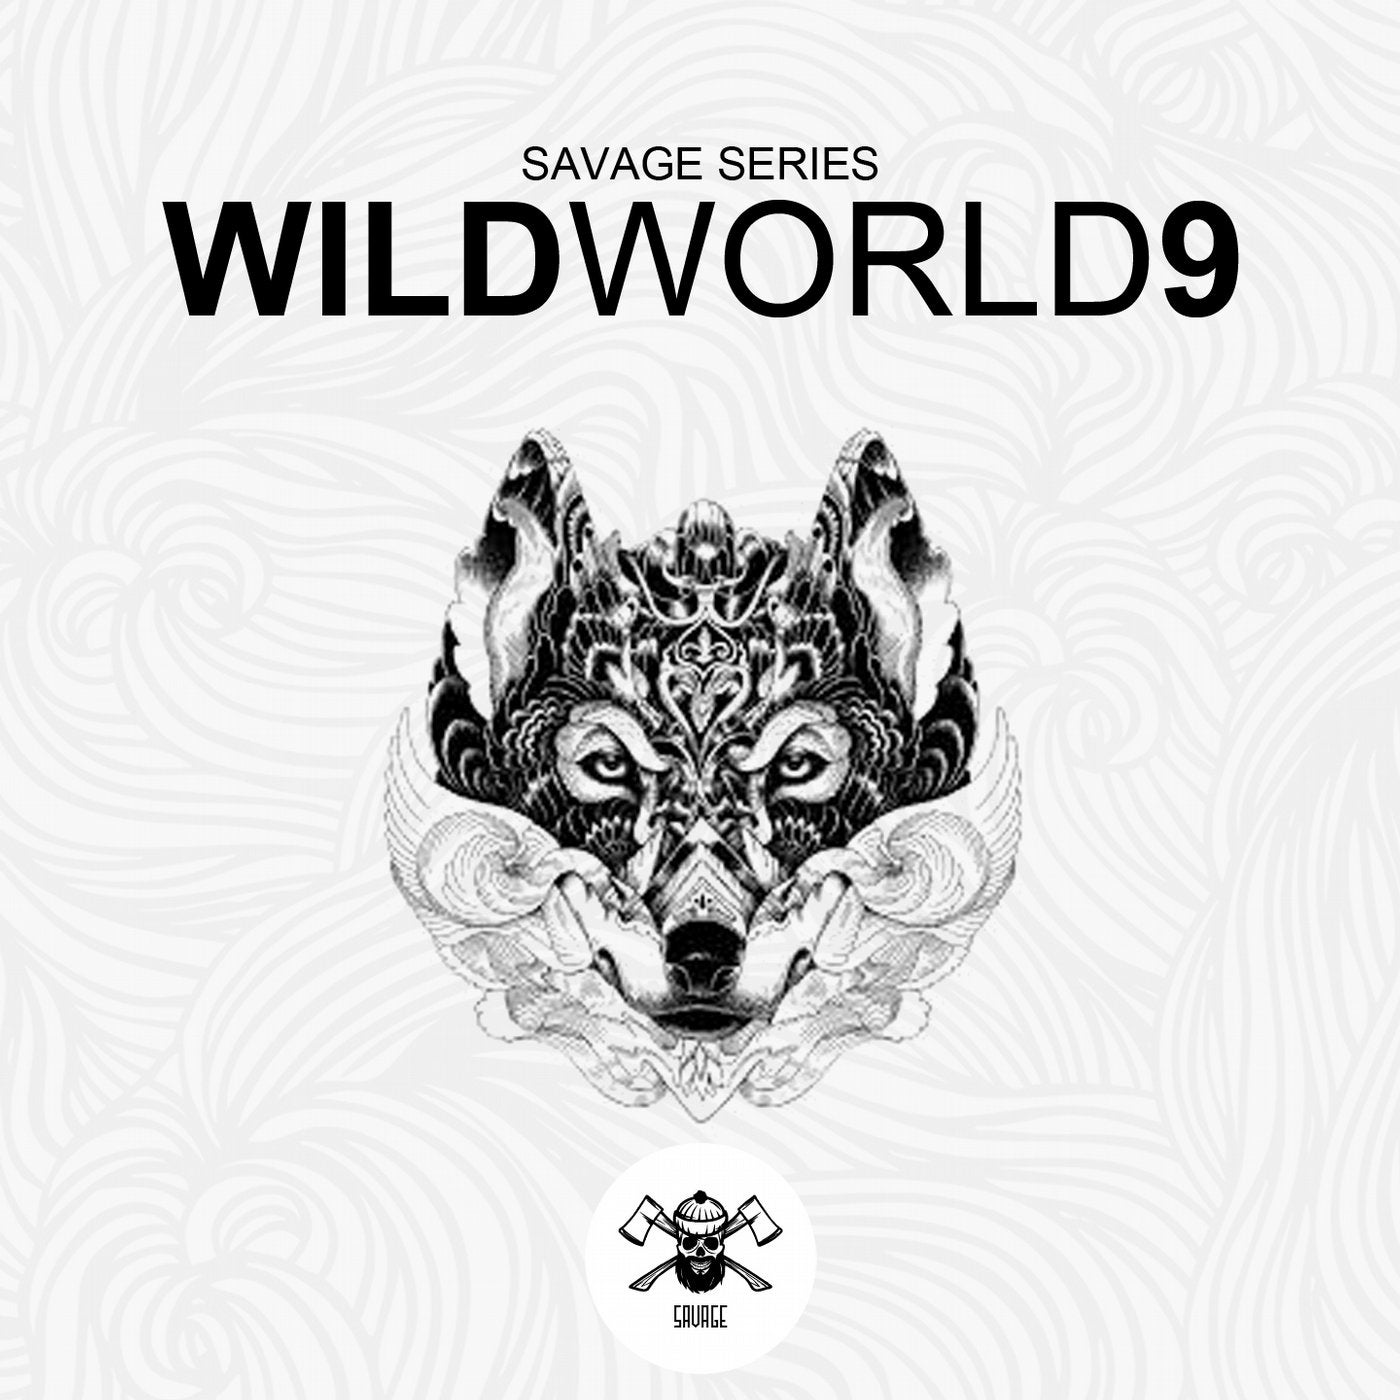 WildWorld9 (Savage Series)